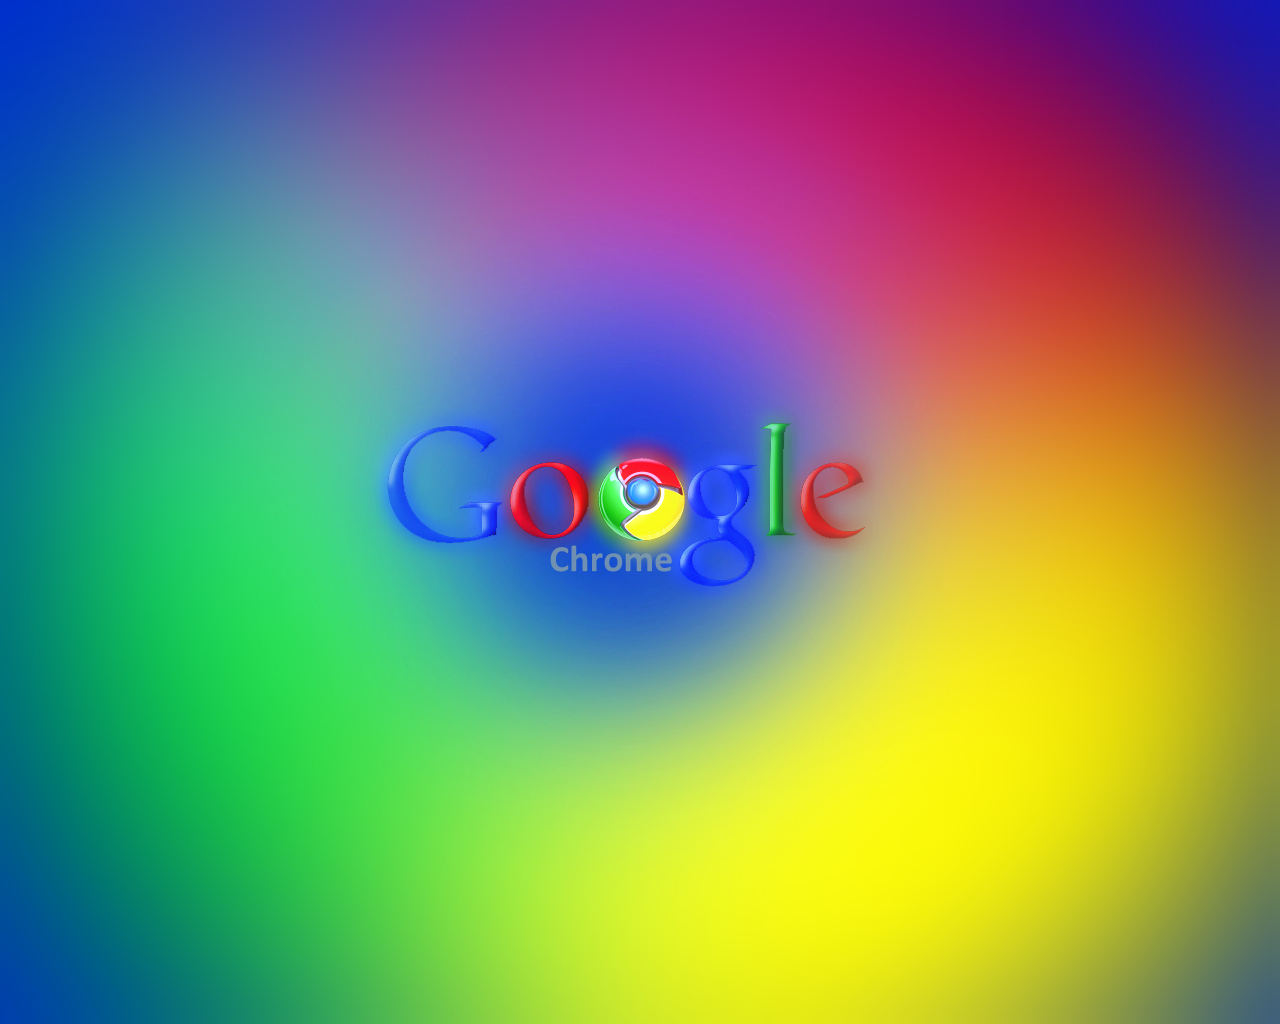 50+] Google Chrome Live Wallpaper